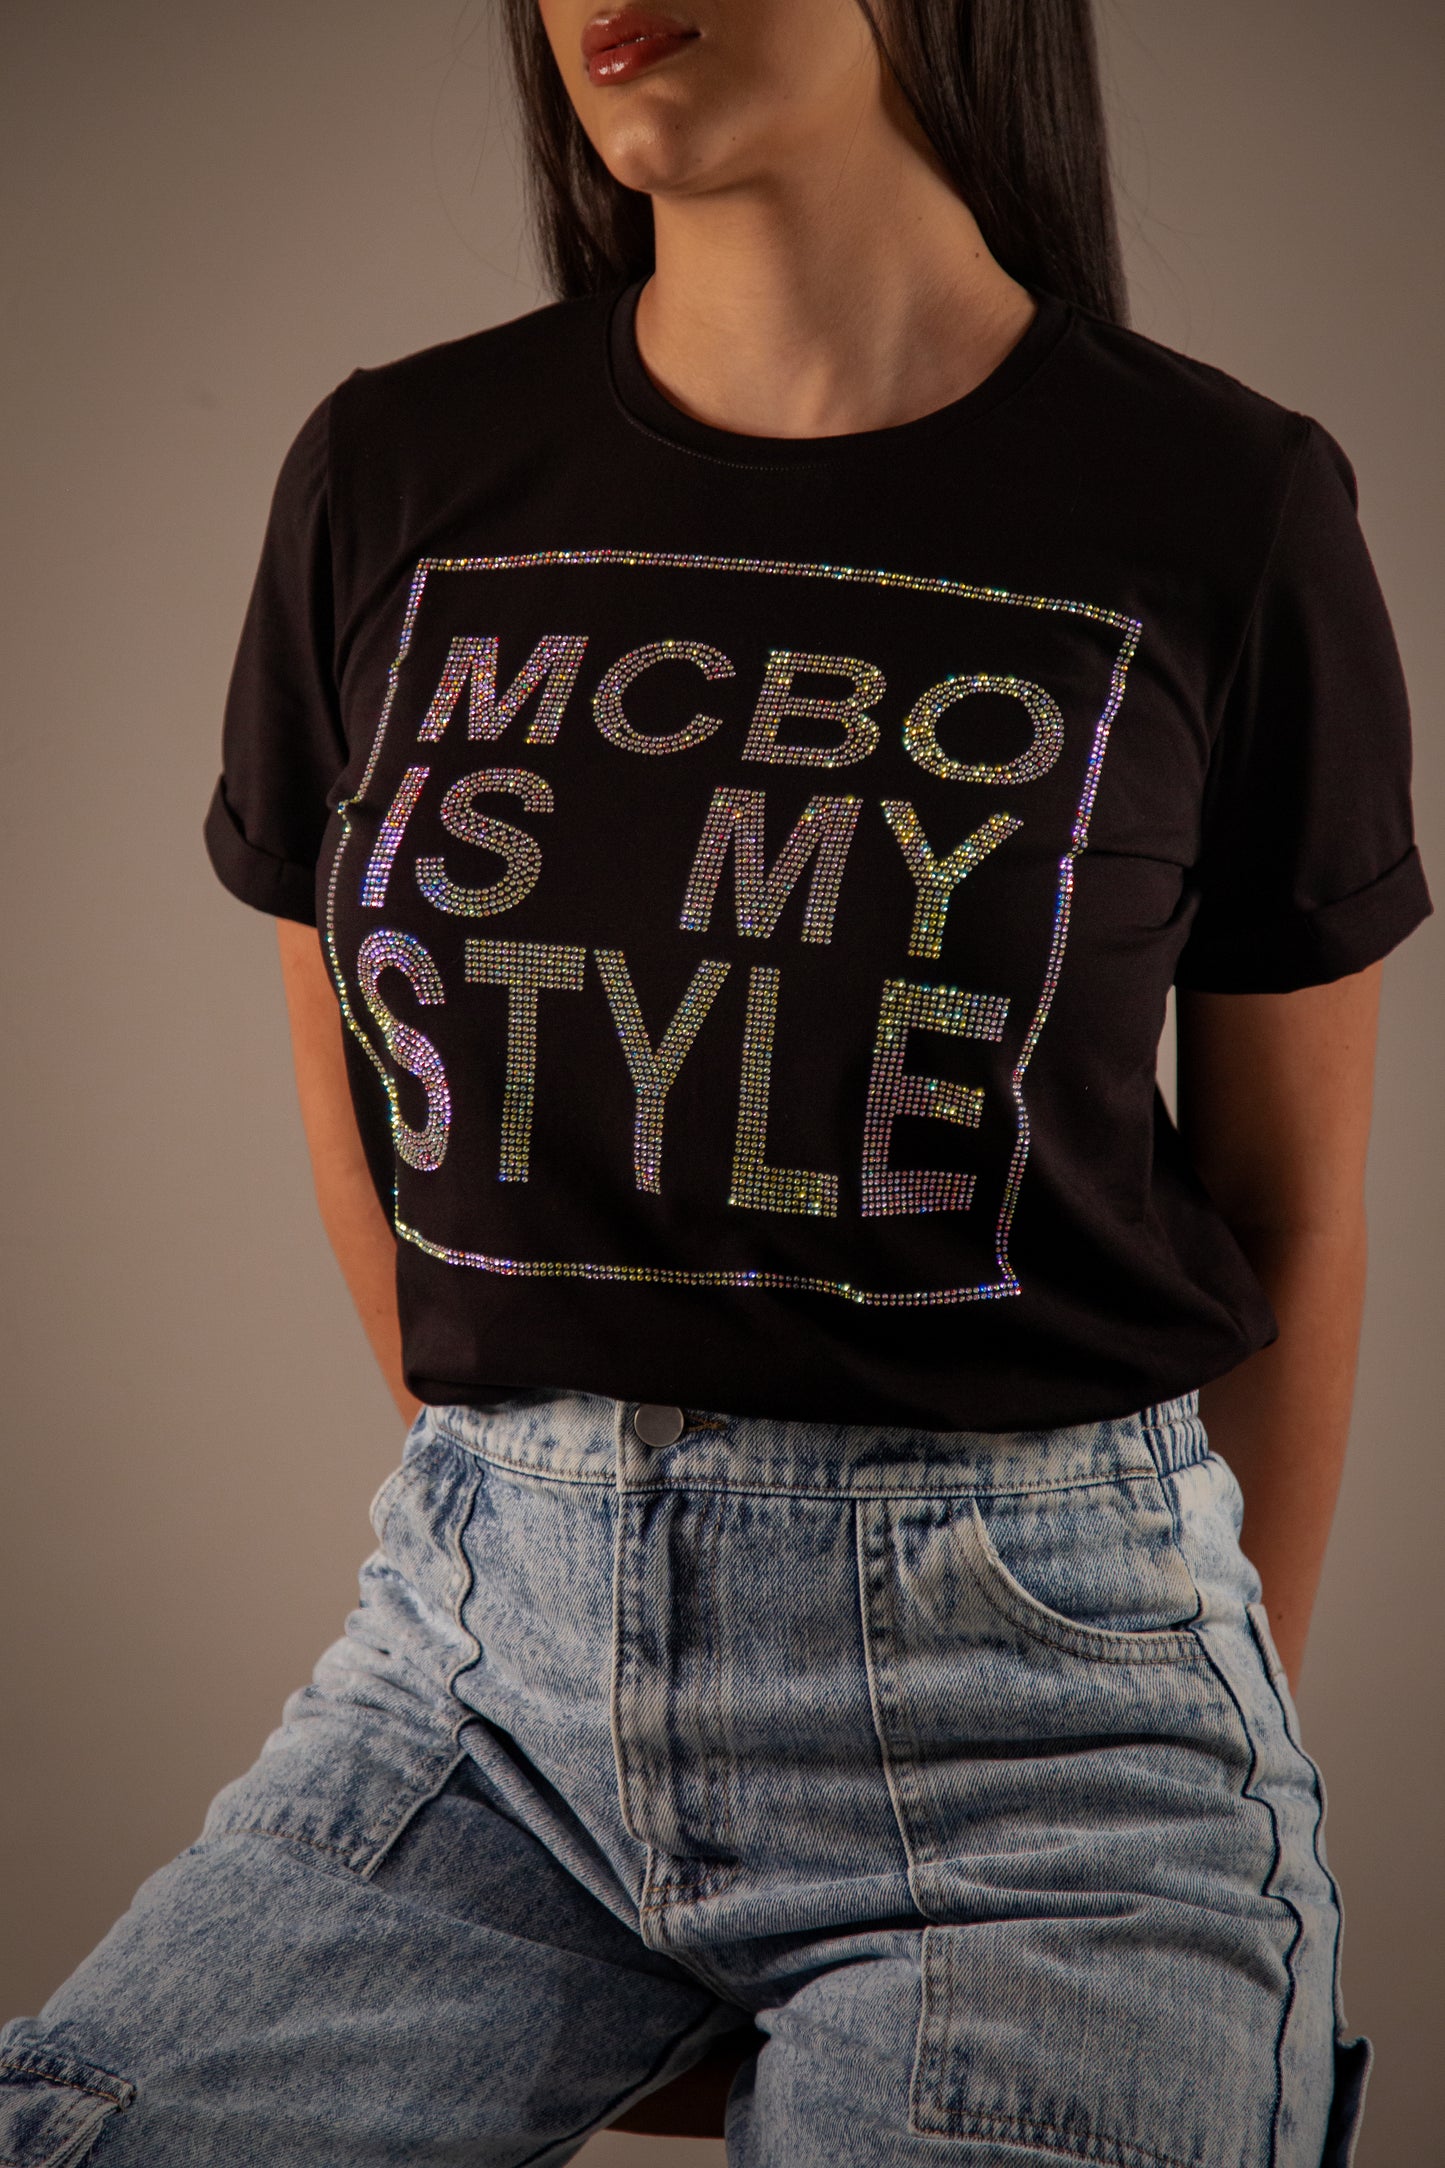 MCBO IS MY STILE